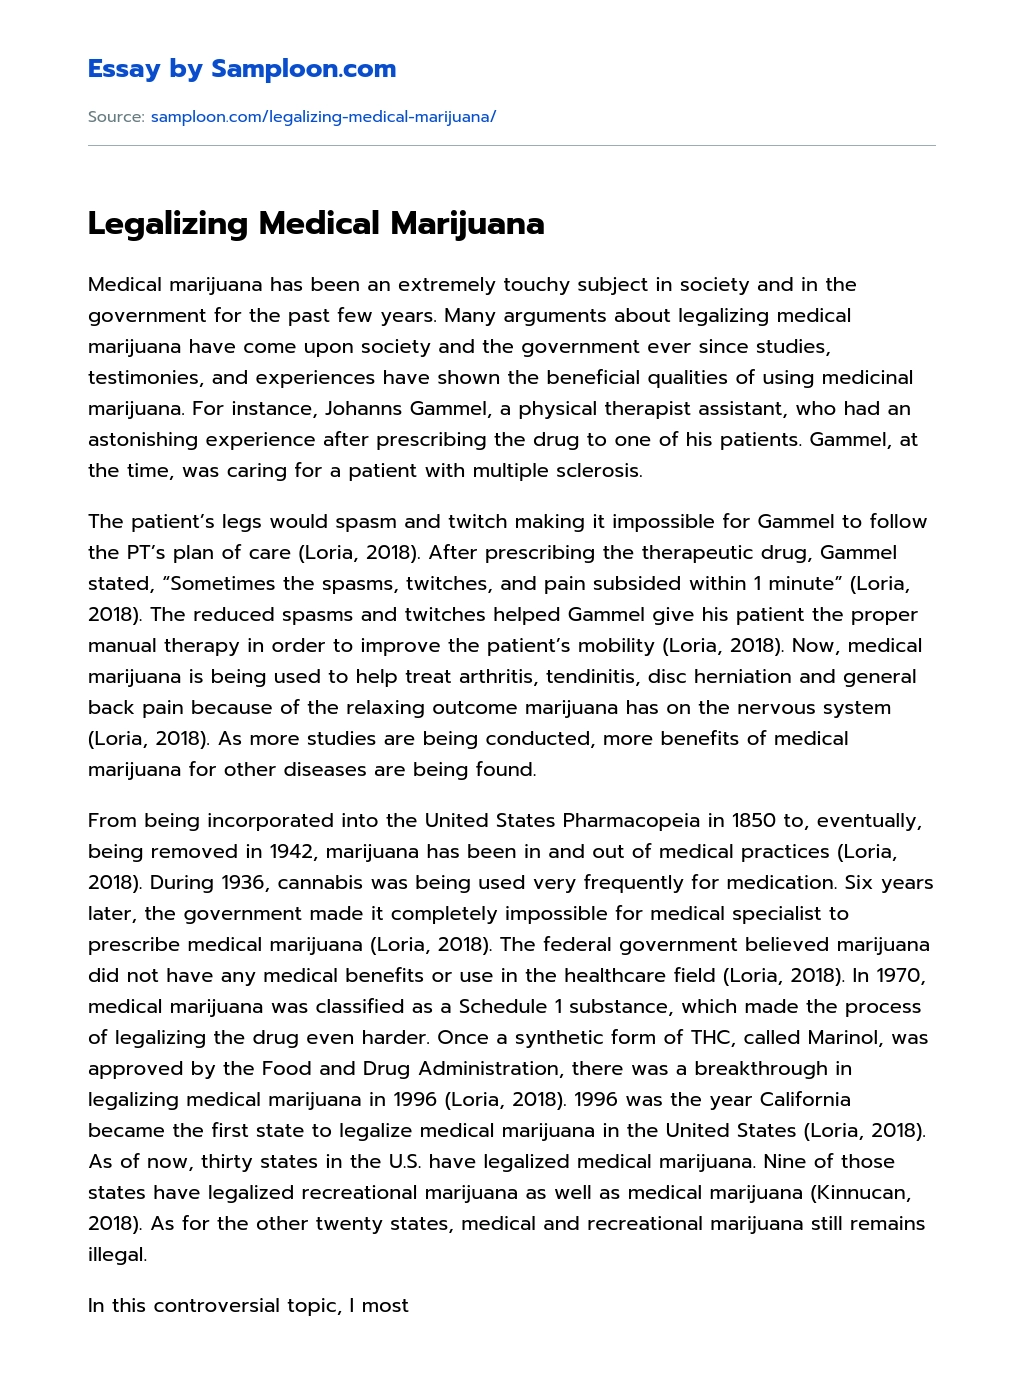 Legalizing Medical Marijuana essay